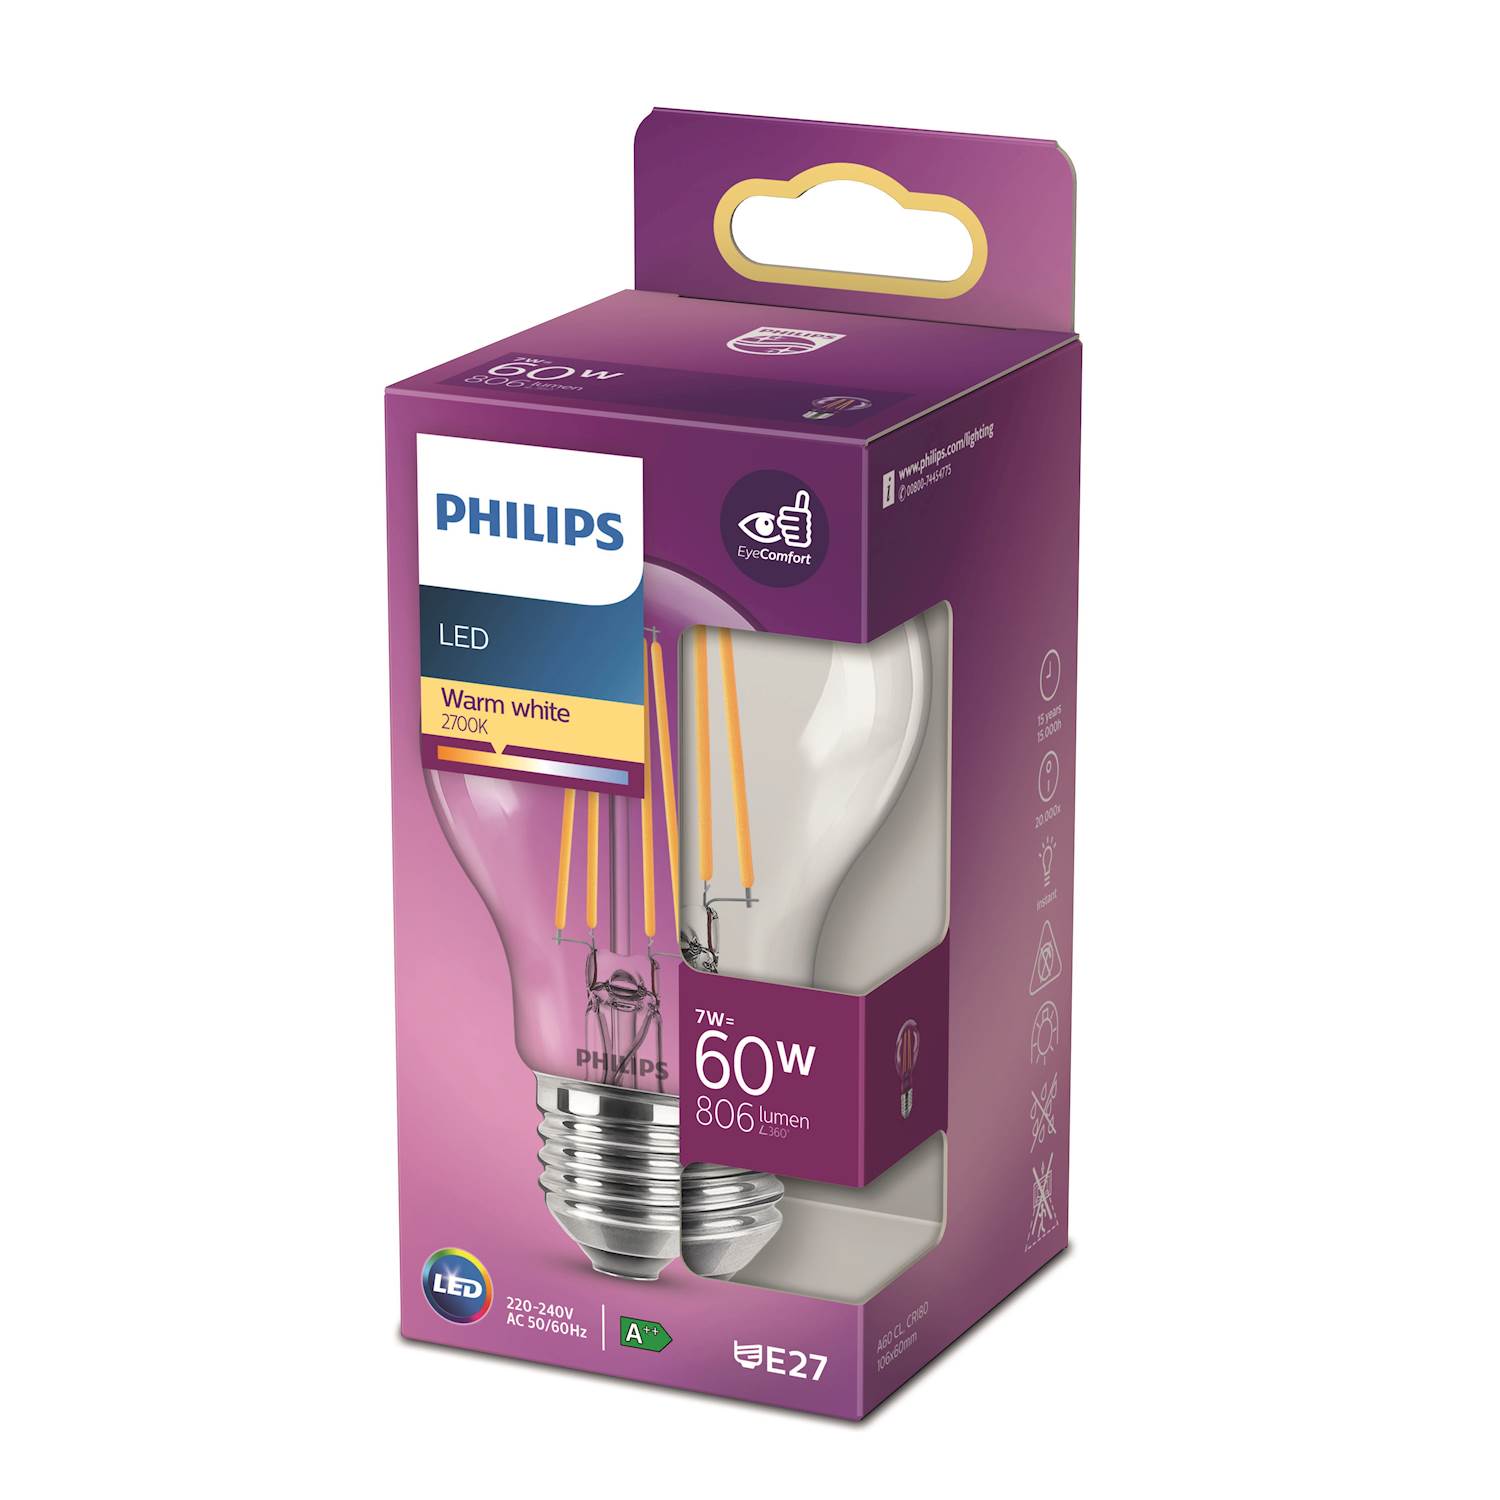 Läs mer om Philips LED Classic 60w norm e27 nd